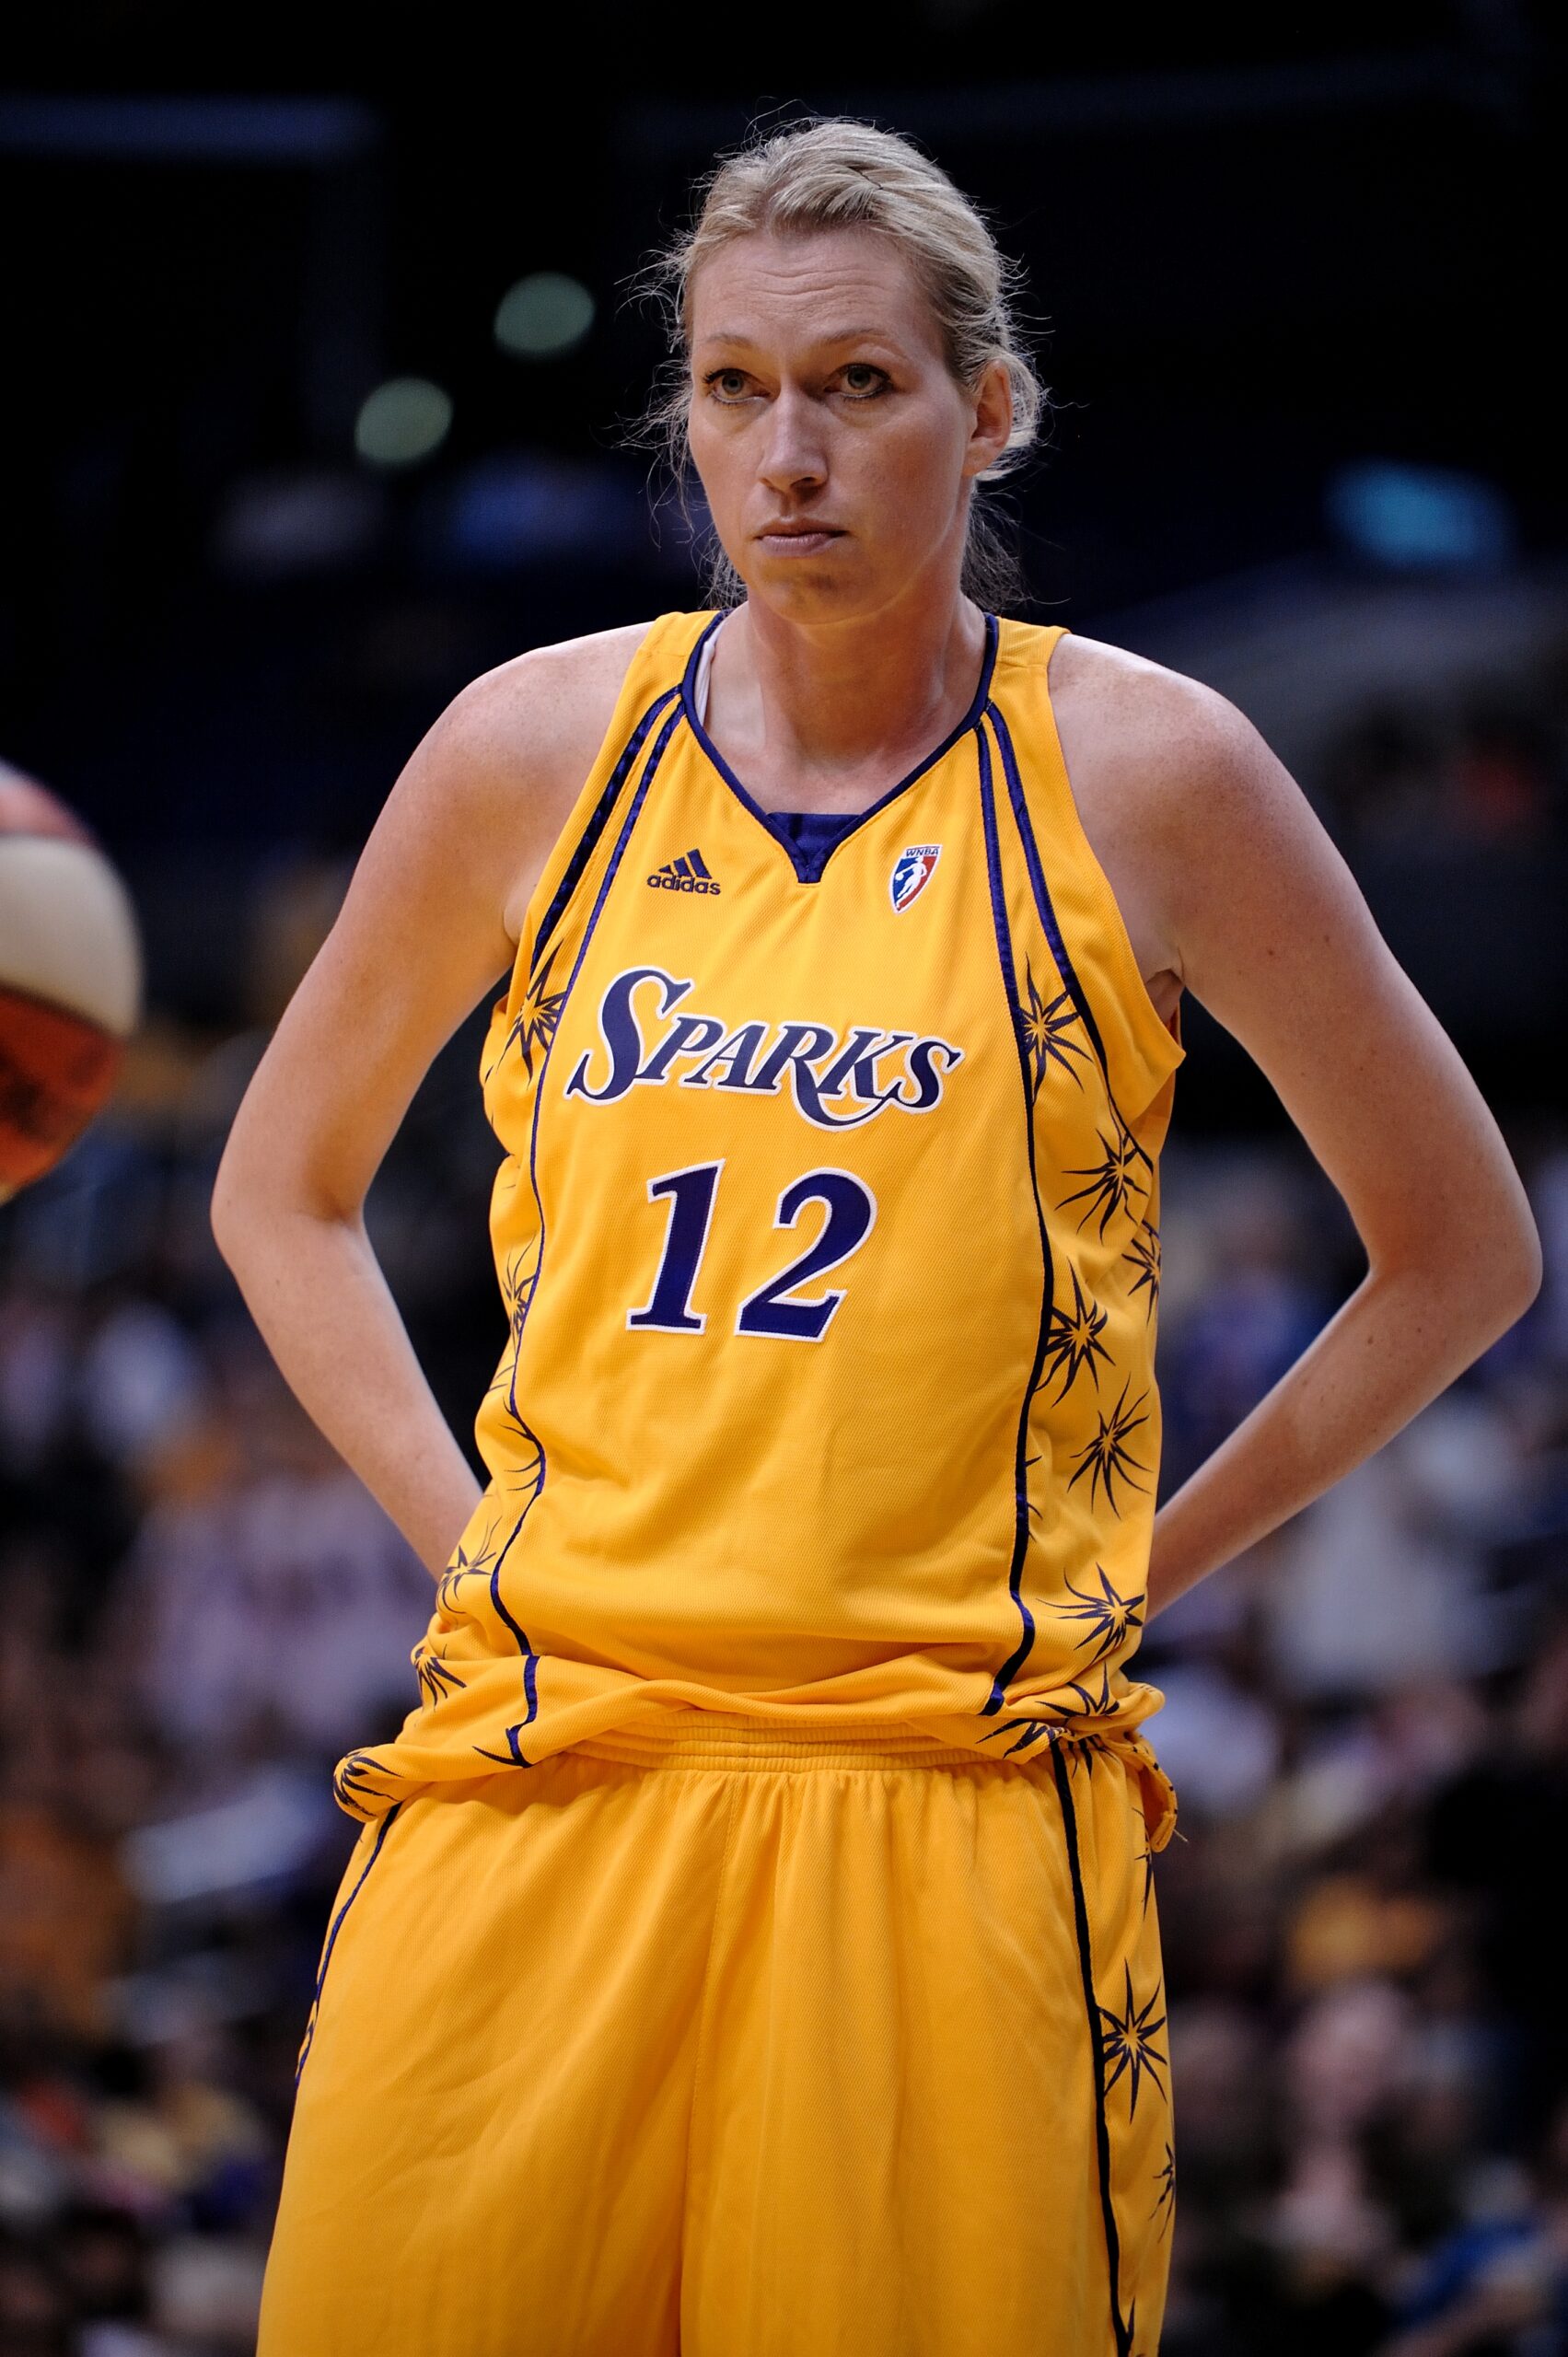 WNBA player Malgrozata ‘ Margo’ Dydek height 7 ft 2 inches